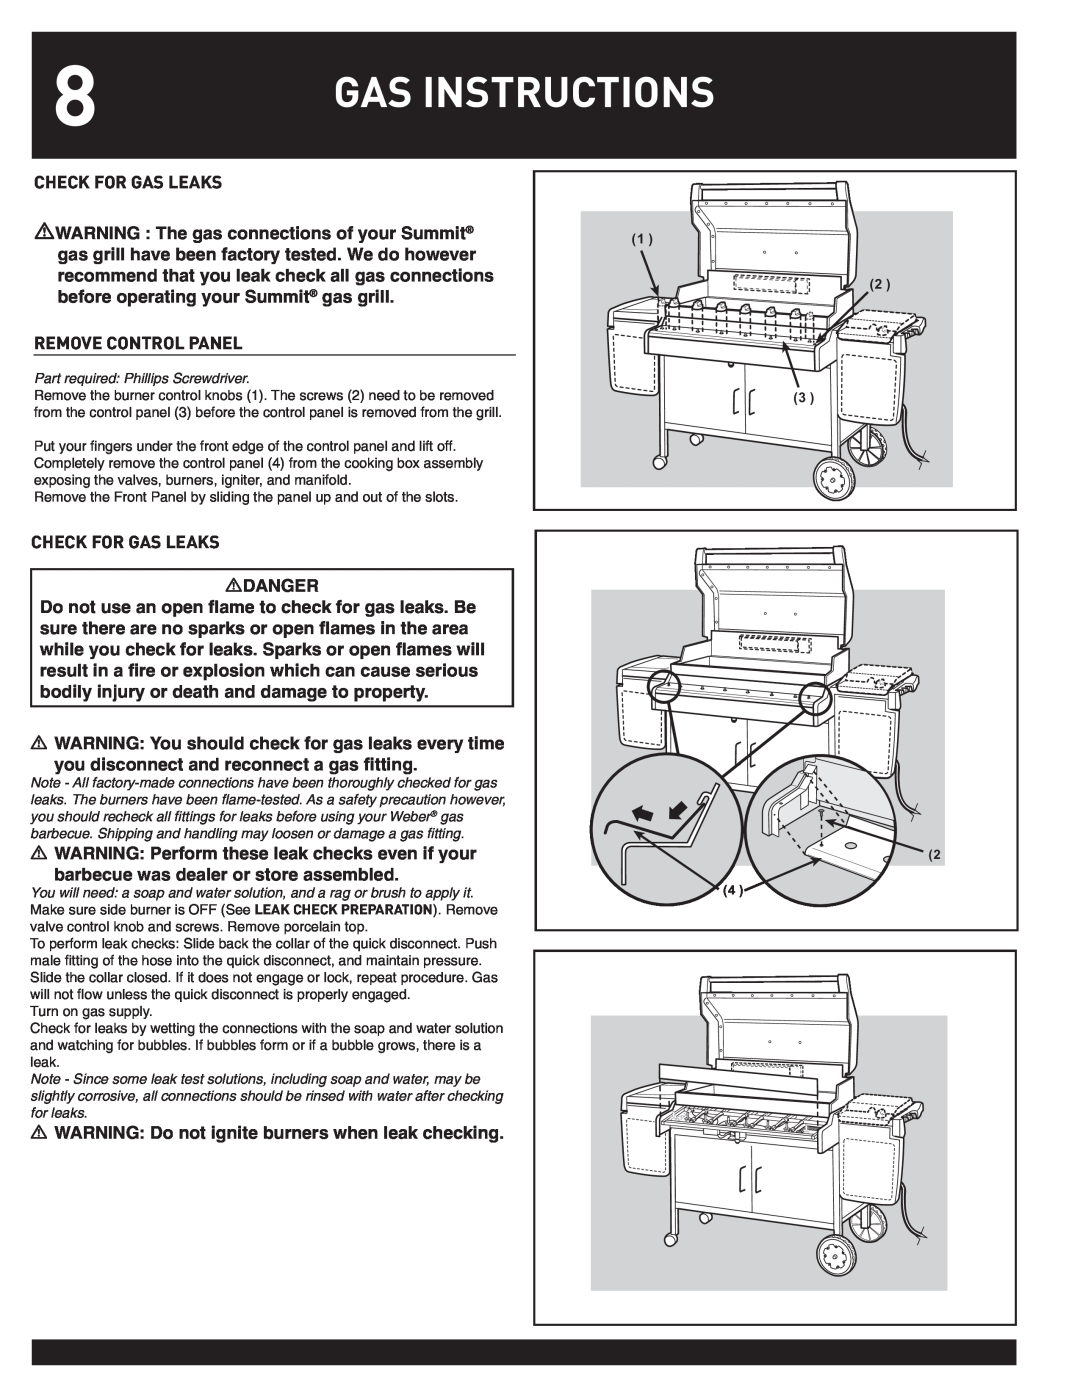 Weber SUMMIT manual Gas Instructions, Danger 